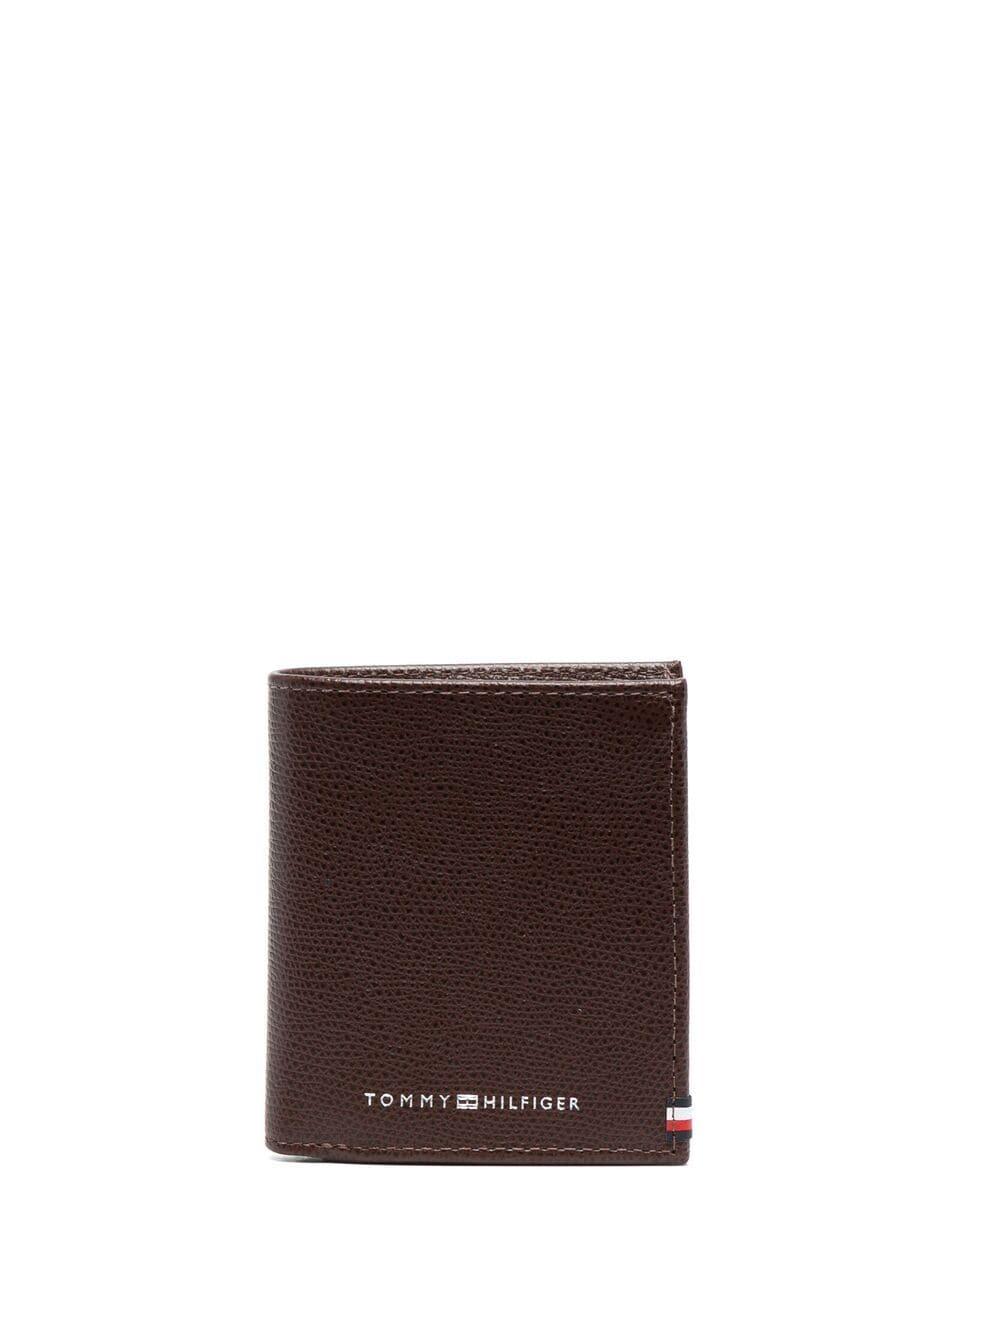 Tommy Hilfiger Leather Engraved-logo Wallet in for Men - Lyst